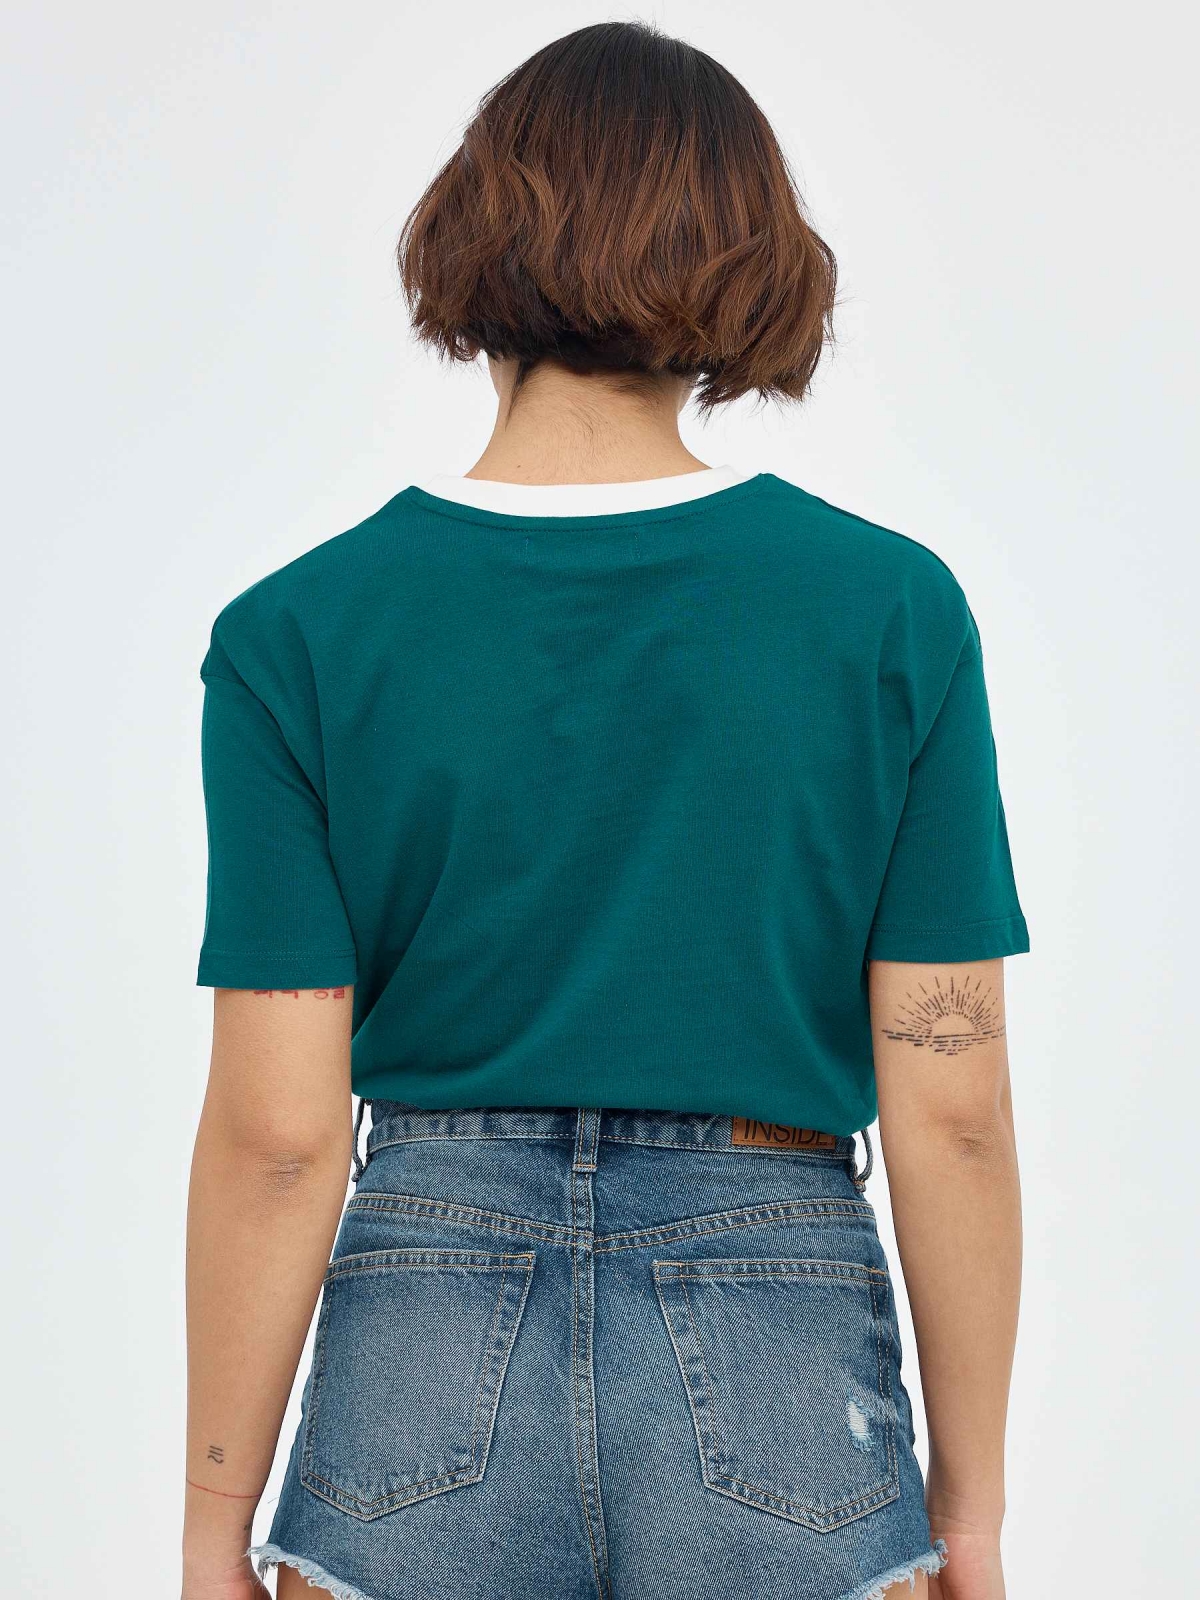 Arizona T-shirt emerald middle back view